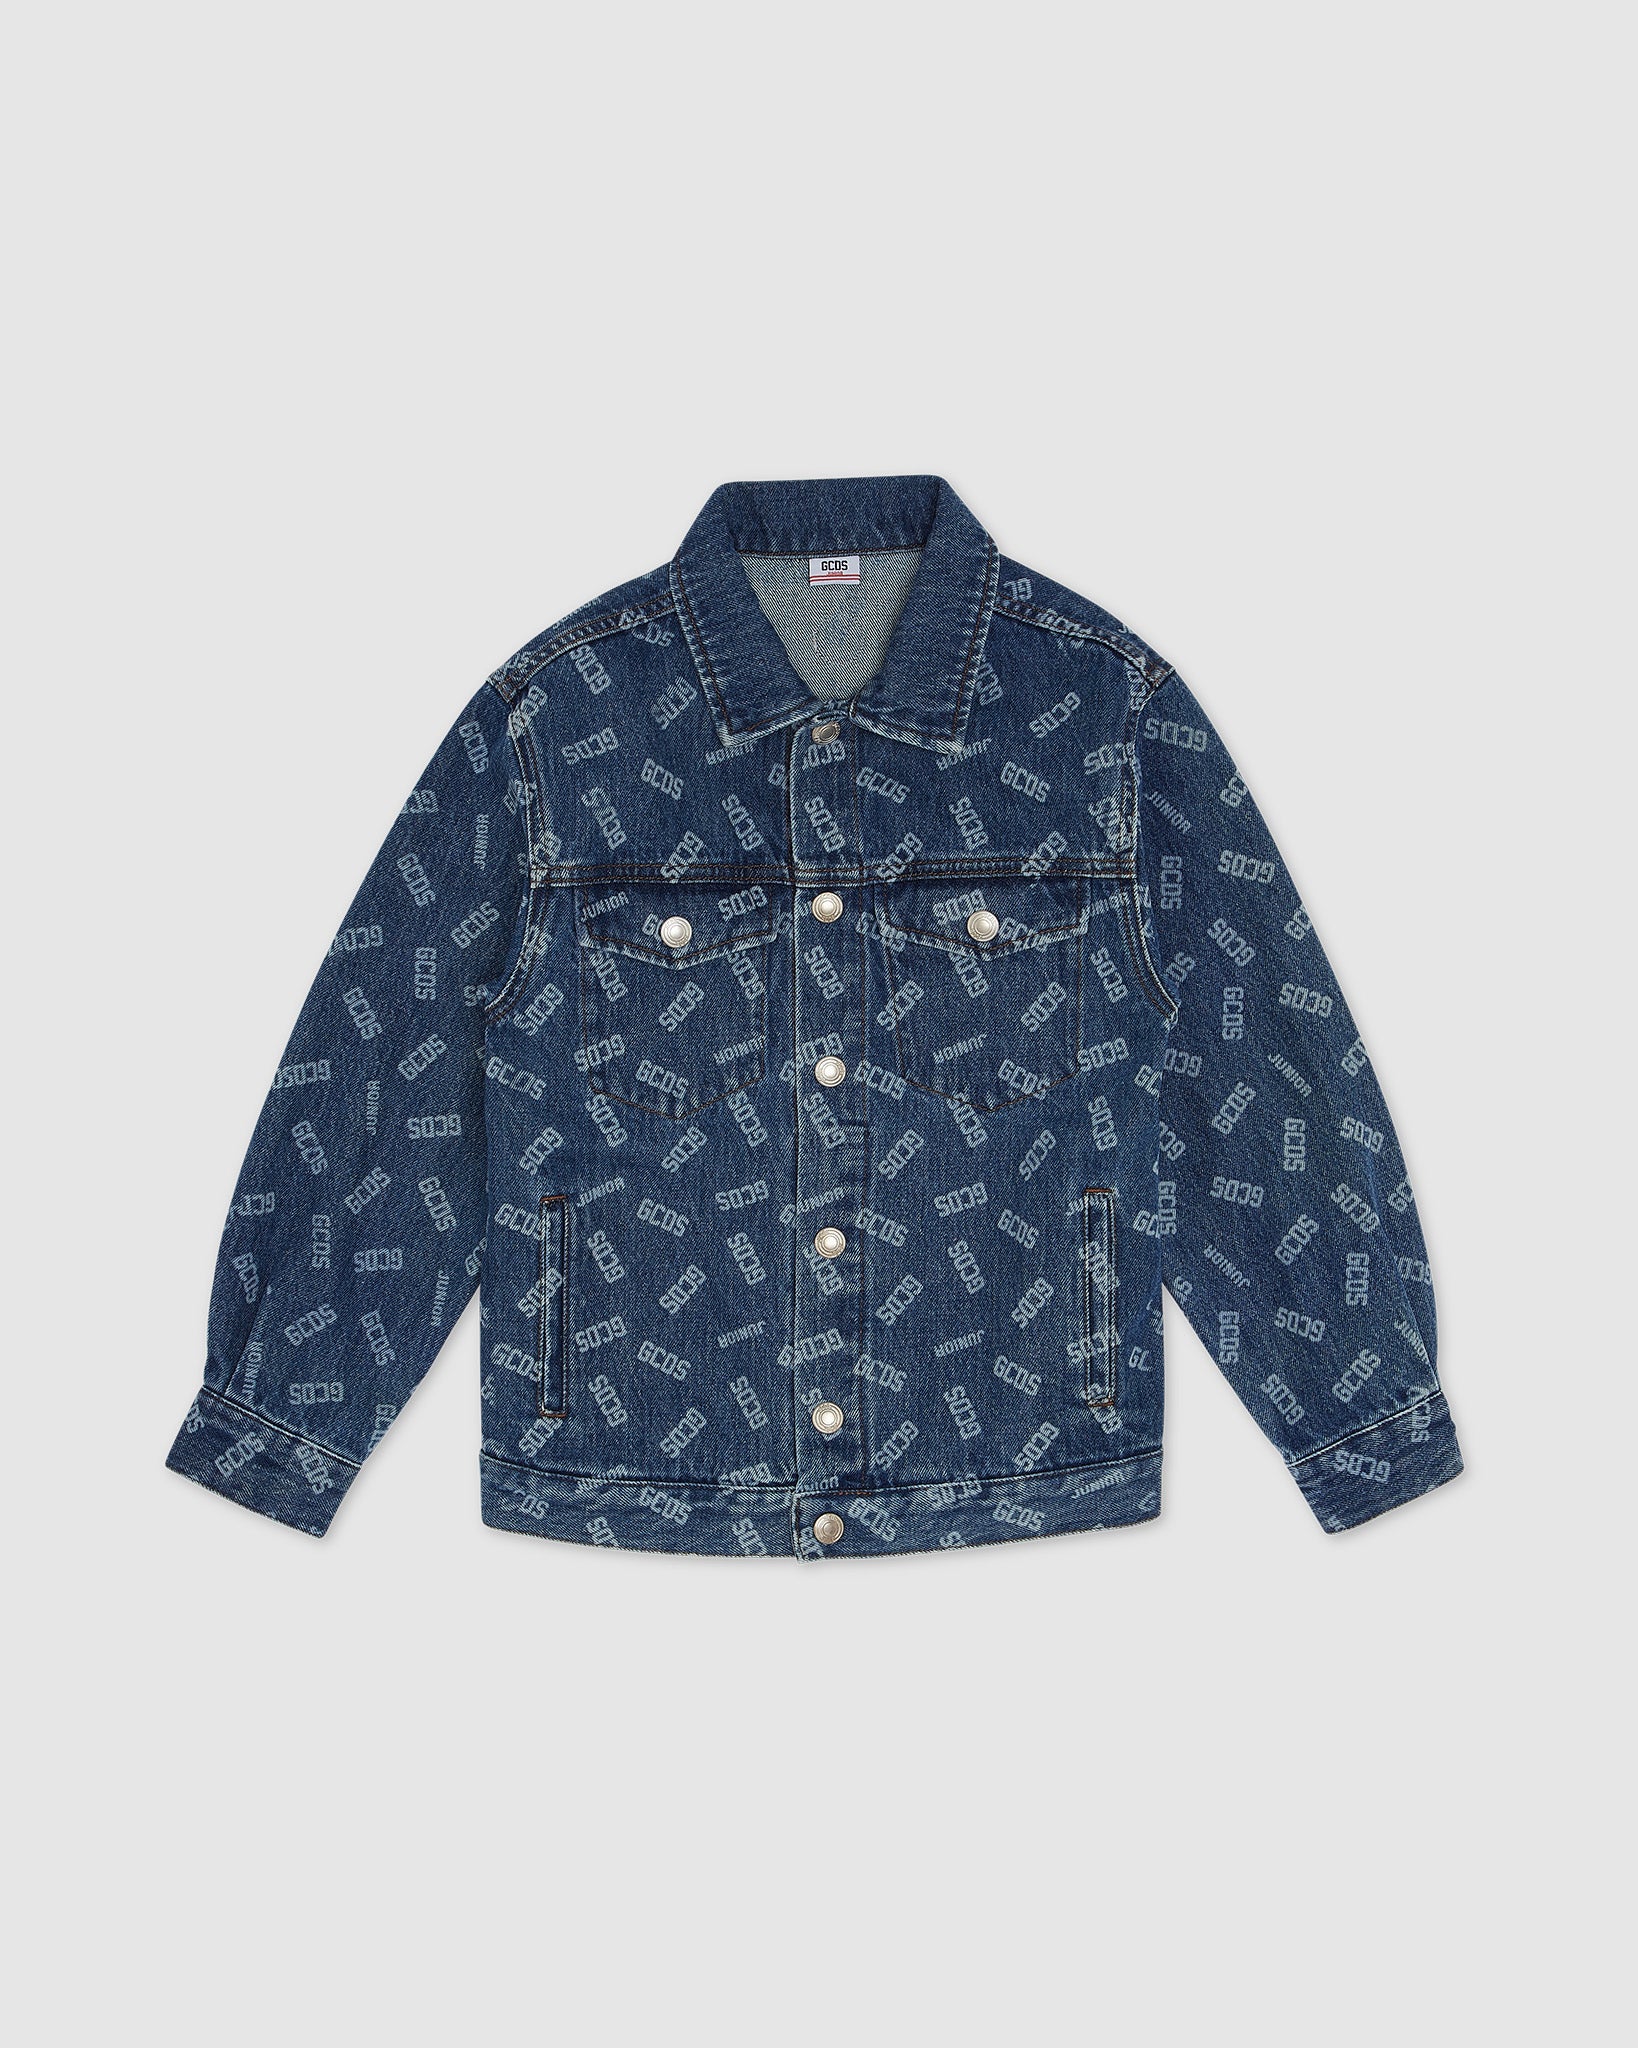 LV x Supreme denim jacket, Men's Fashion, Coats, Jackets and